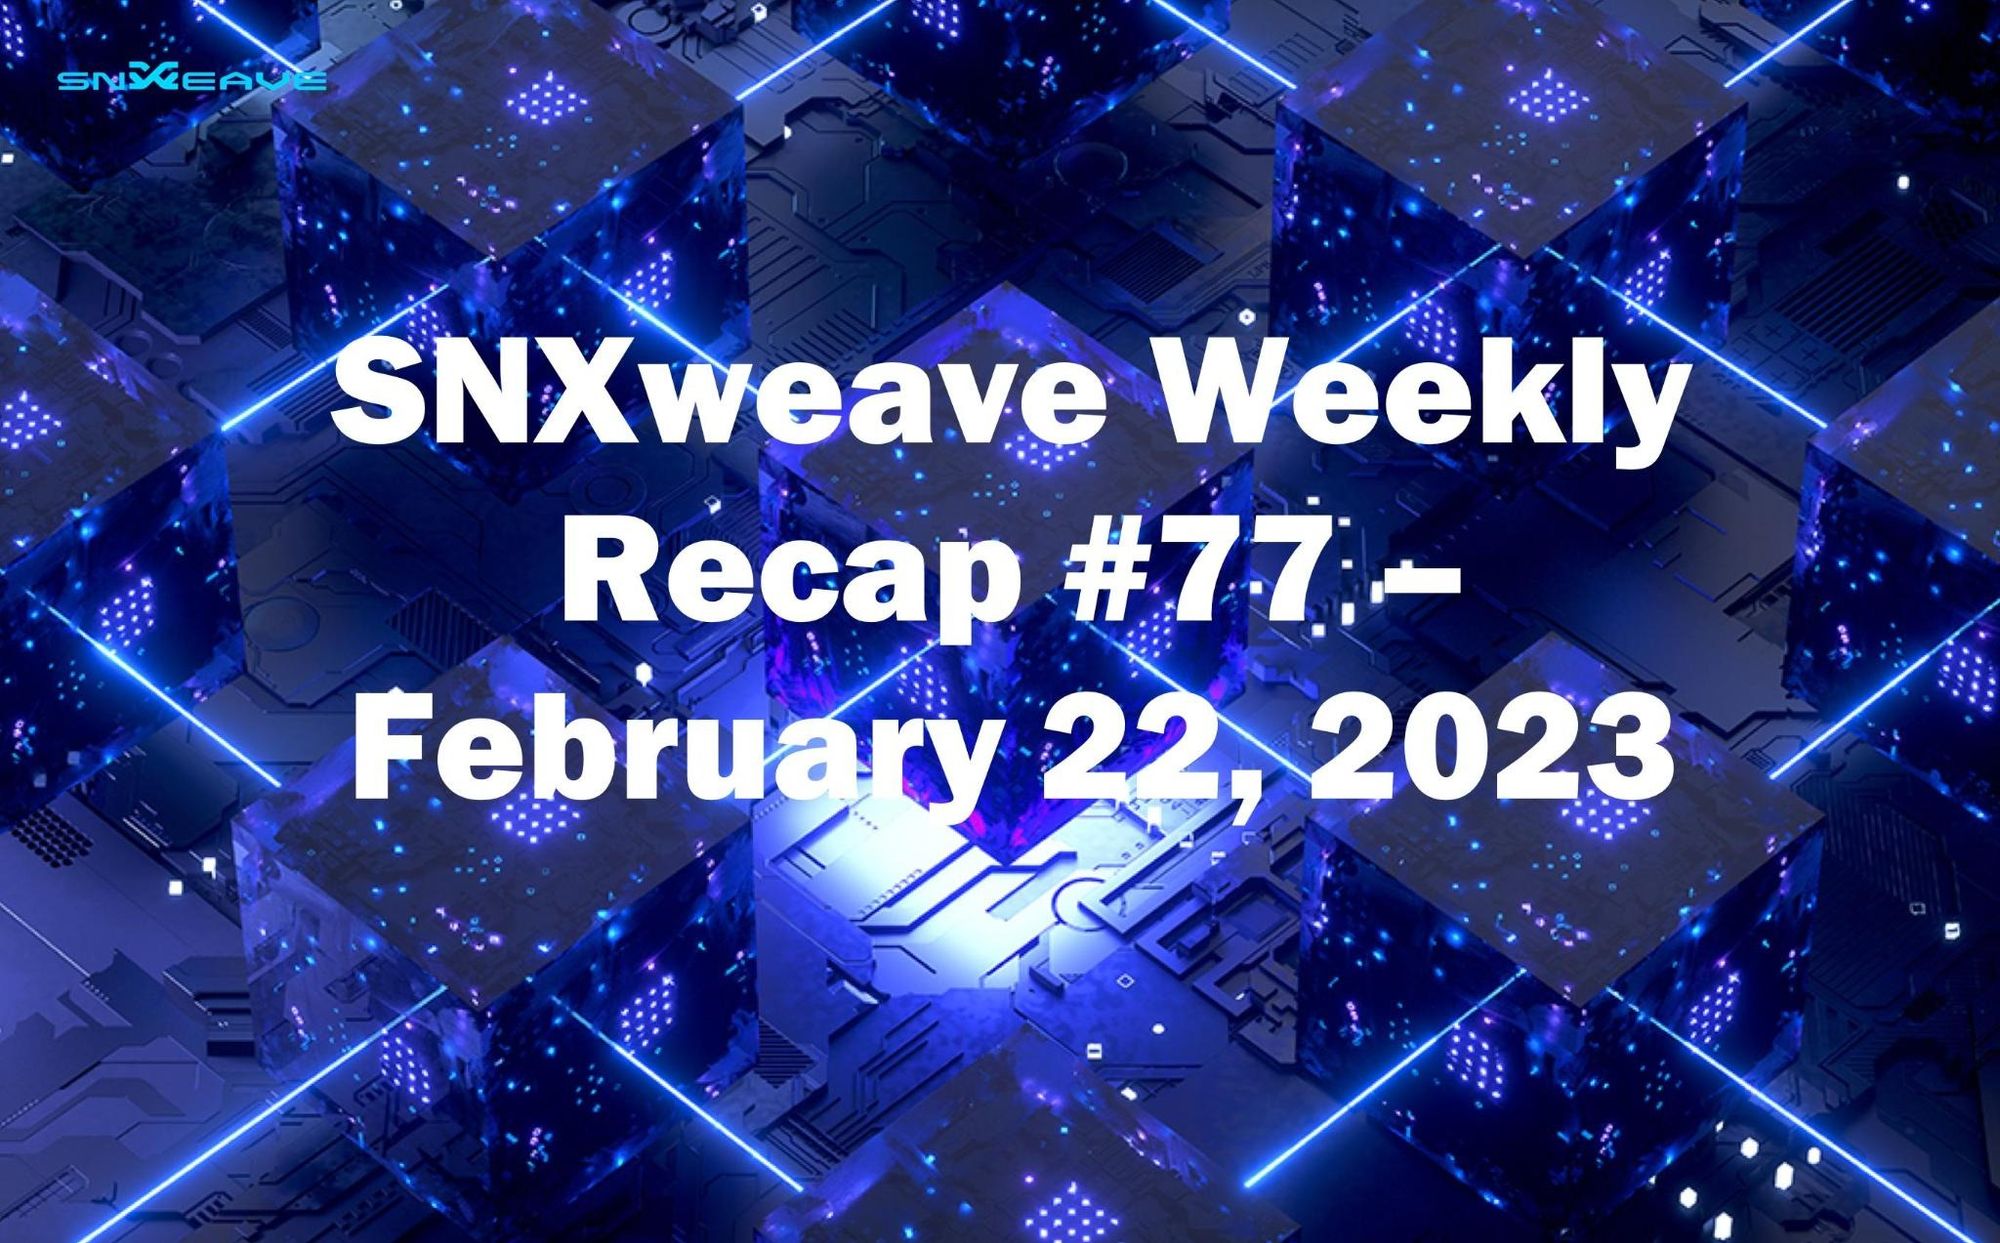 SNXweave Weekly Recap 77